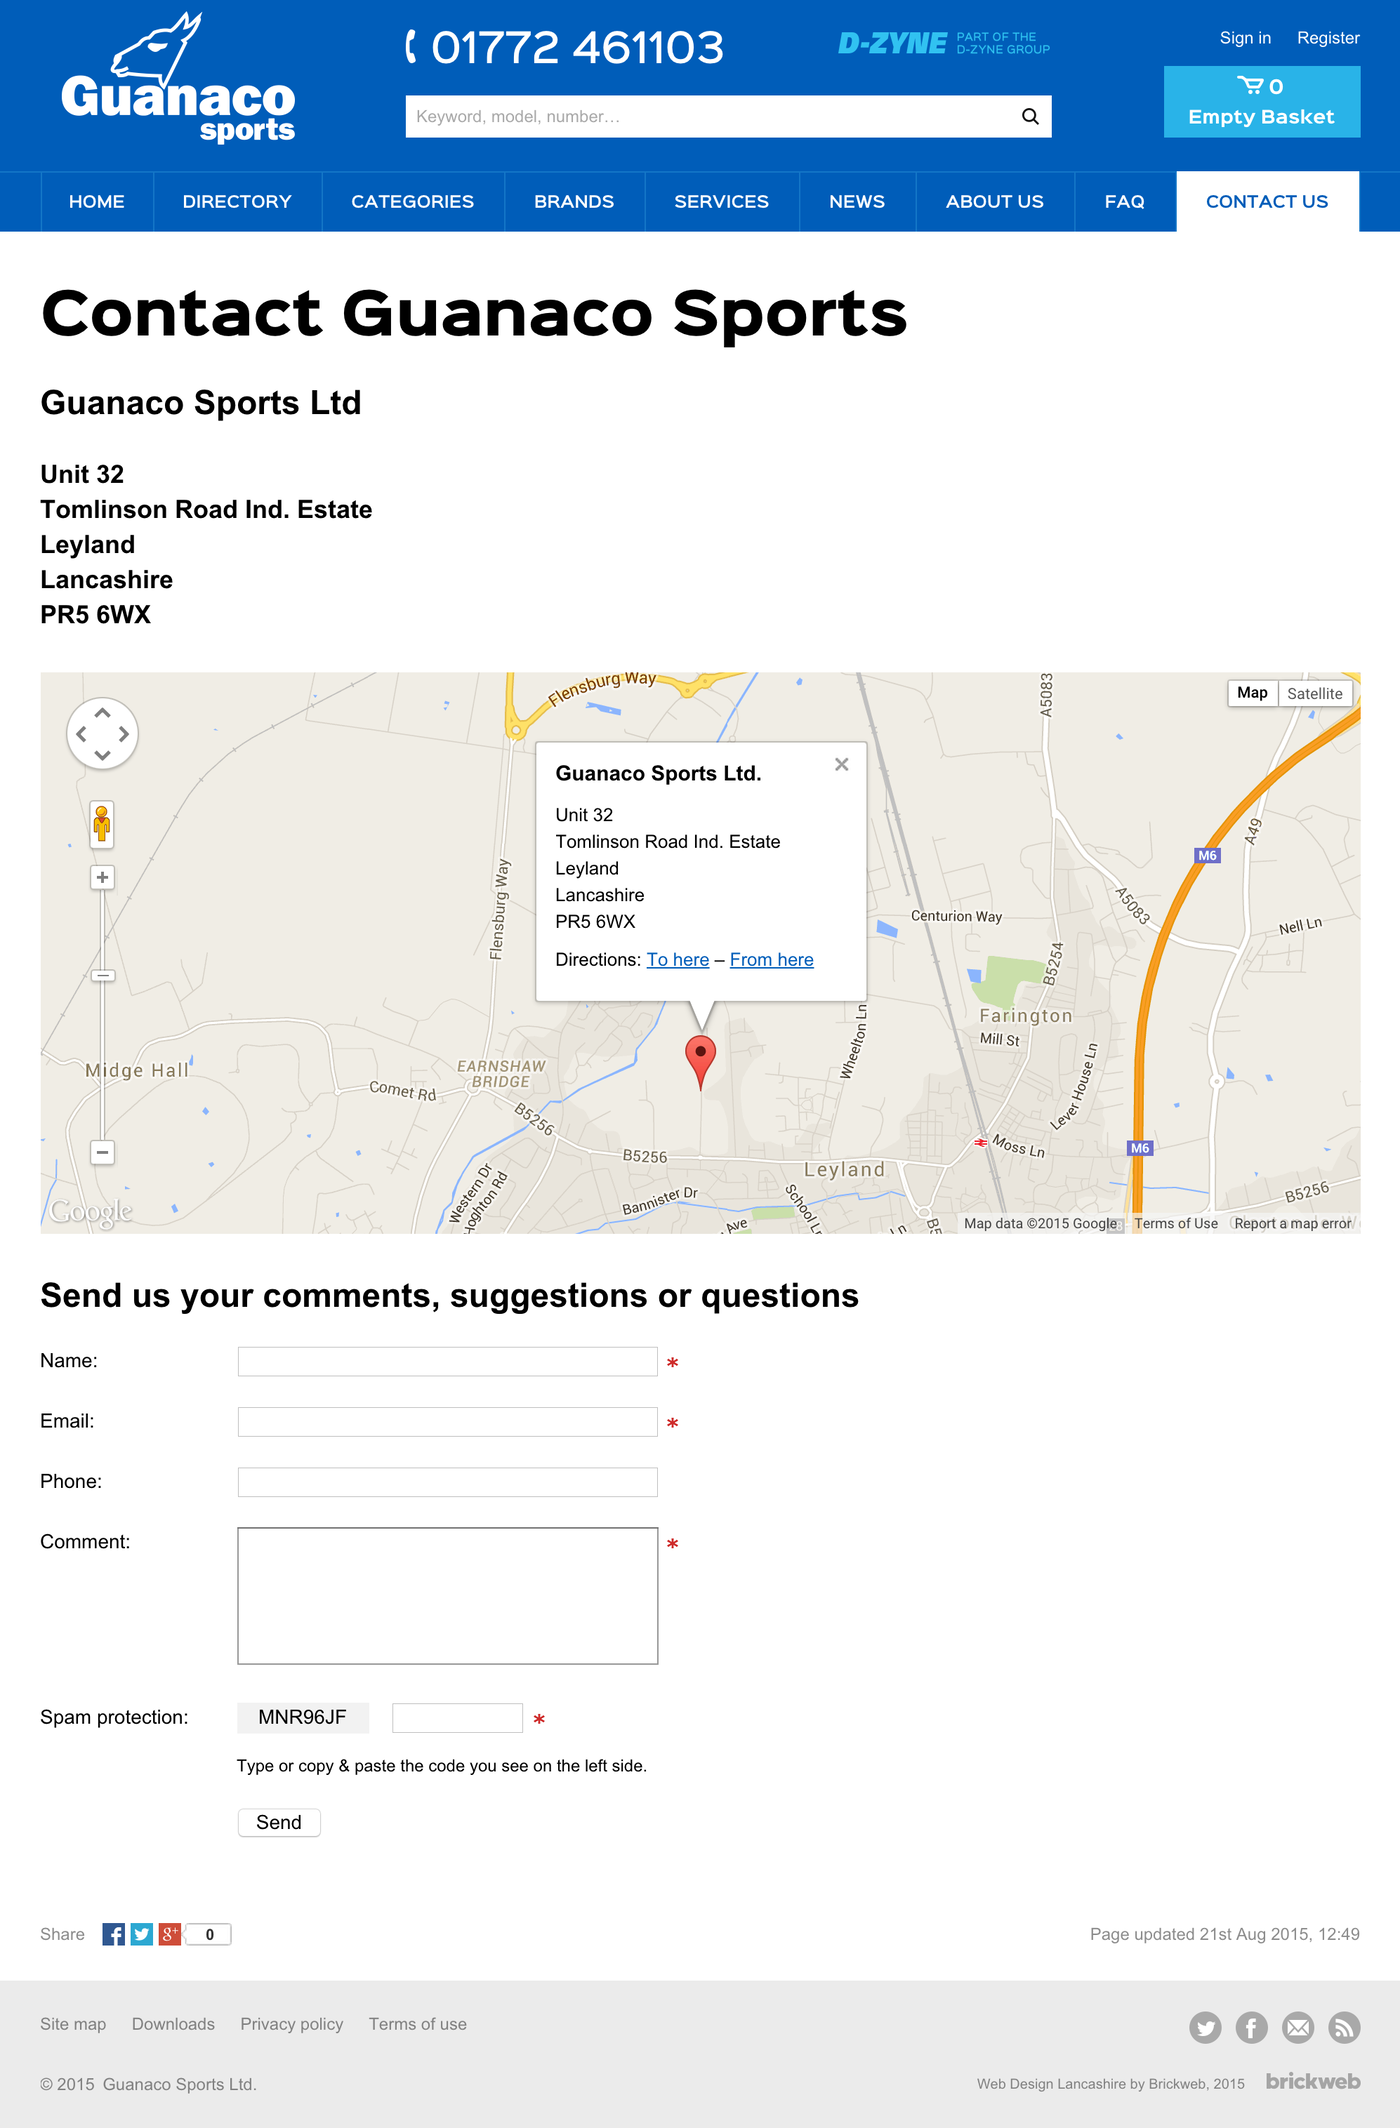 Guanaco Sports Ltd Contact us